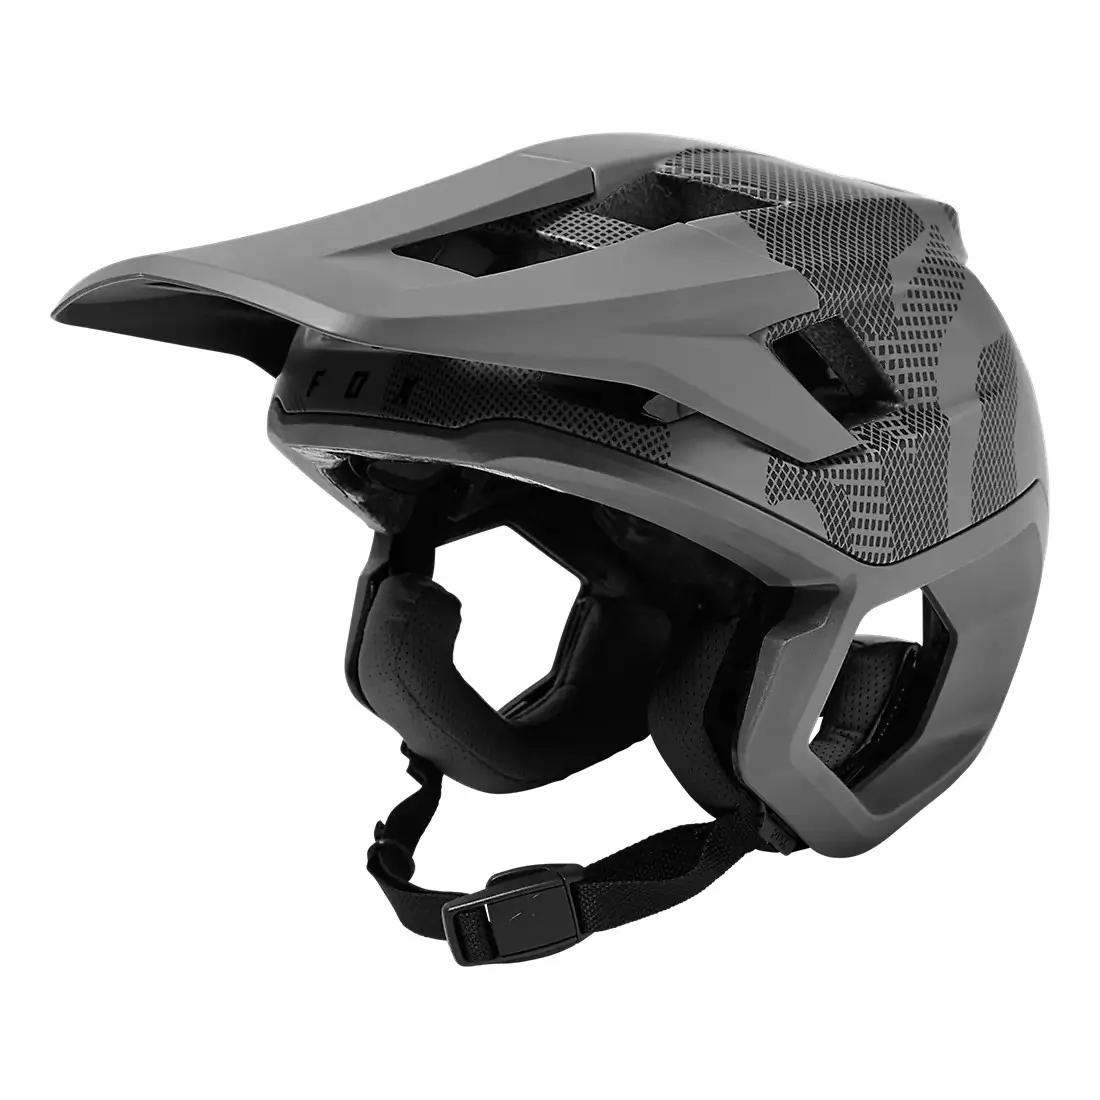 Dropframe Pro Camo Enduro Helmet Gray Camouflage Size S (52-54 cm) #2